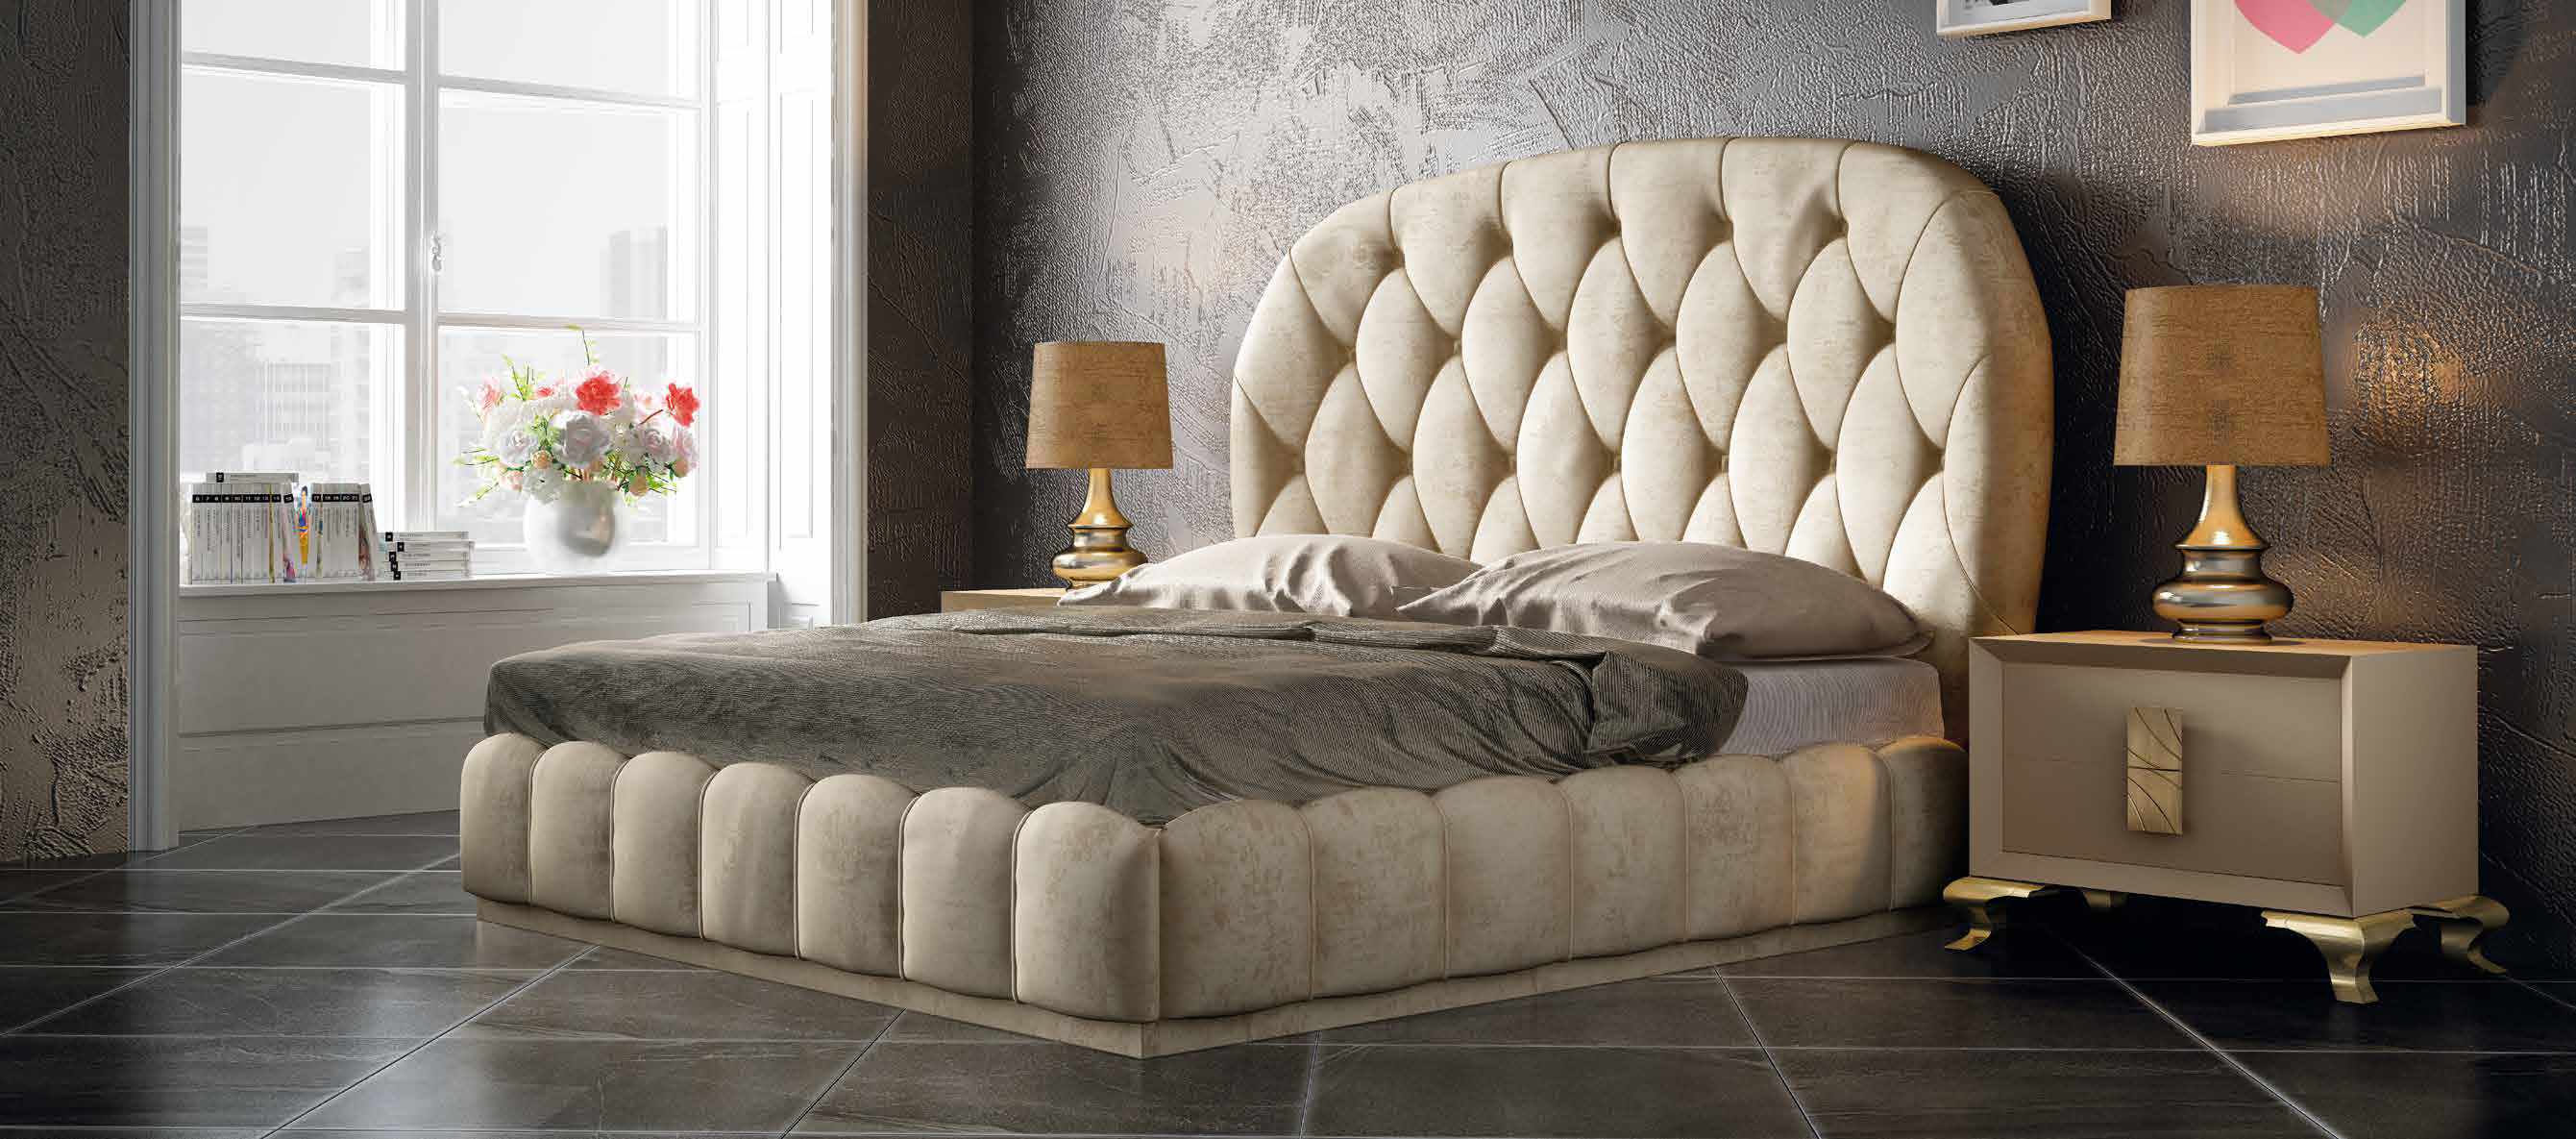 Brands Franco Furniture Bedrooms vol2, Spain DOR 62